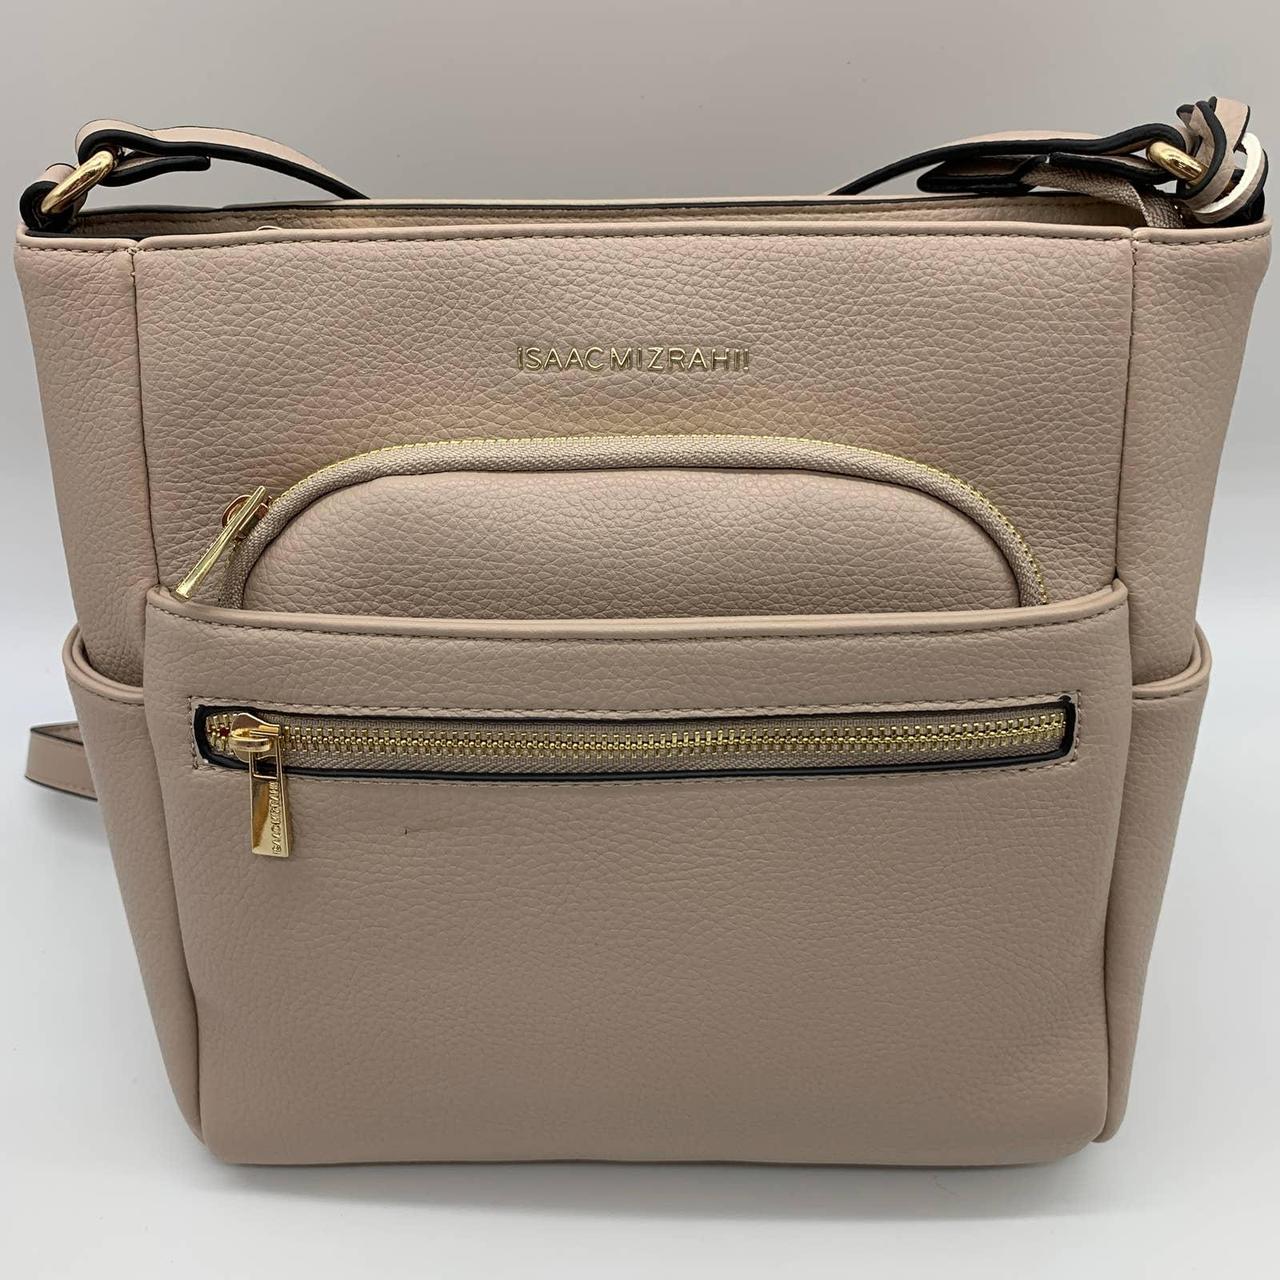 Isaac Mizrahi | Bags | Isaac Mizrahi White Leather Shoulder Bag Purse With  Dust Bag Nora Collection | Poshmark